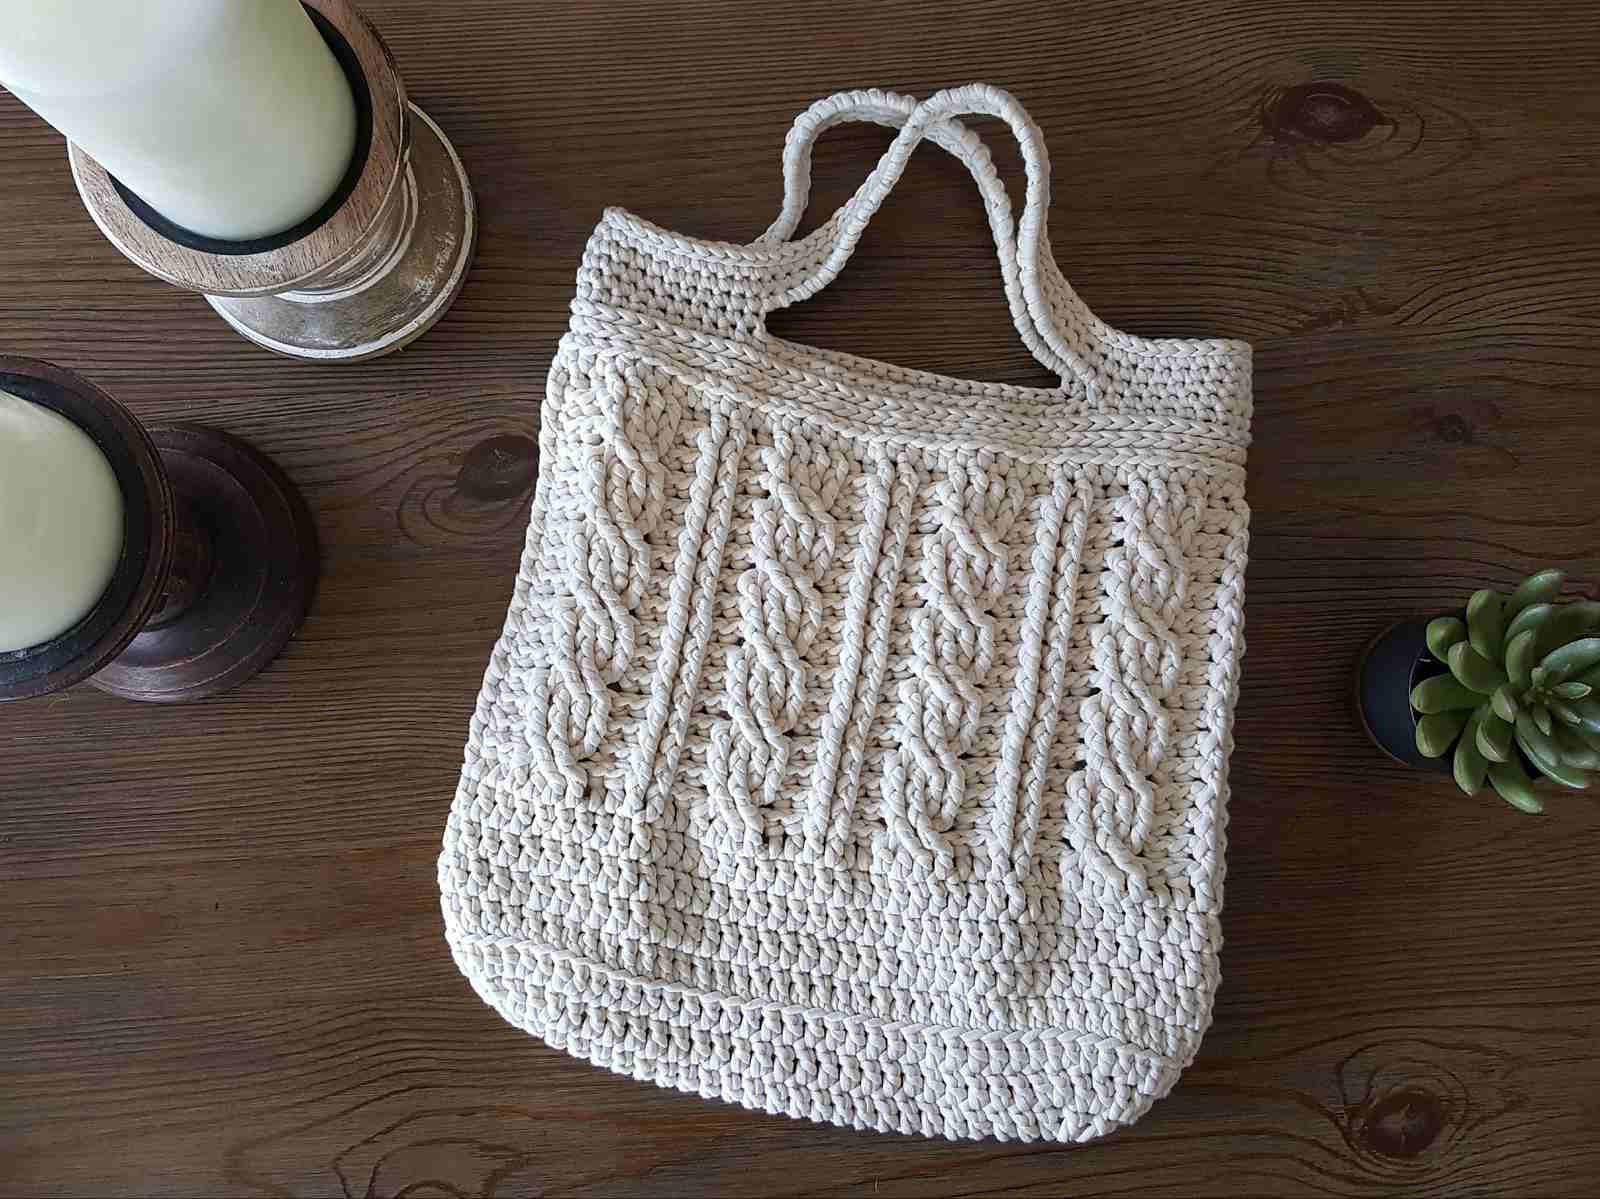 Ravelry Patterns Crochet 8 Creative Crochet Bag Patterns